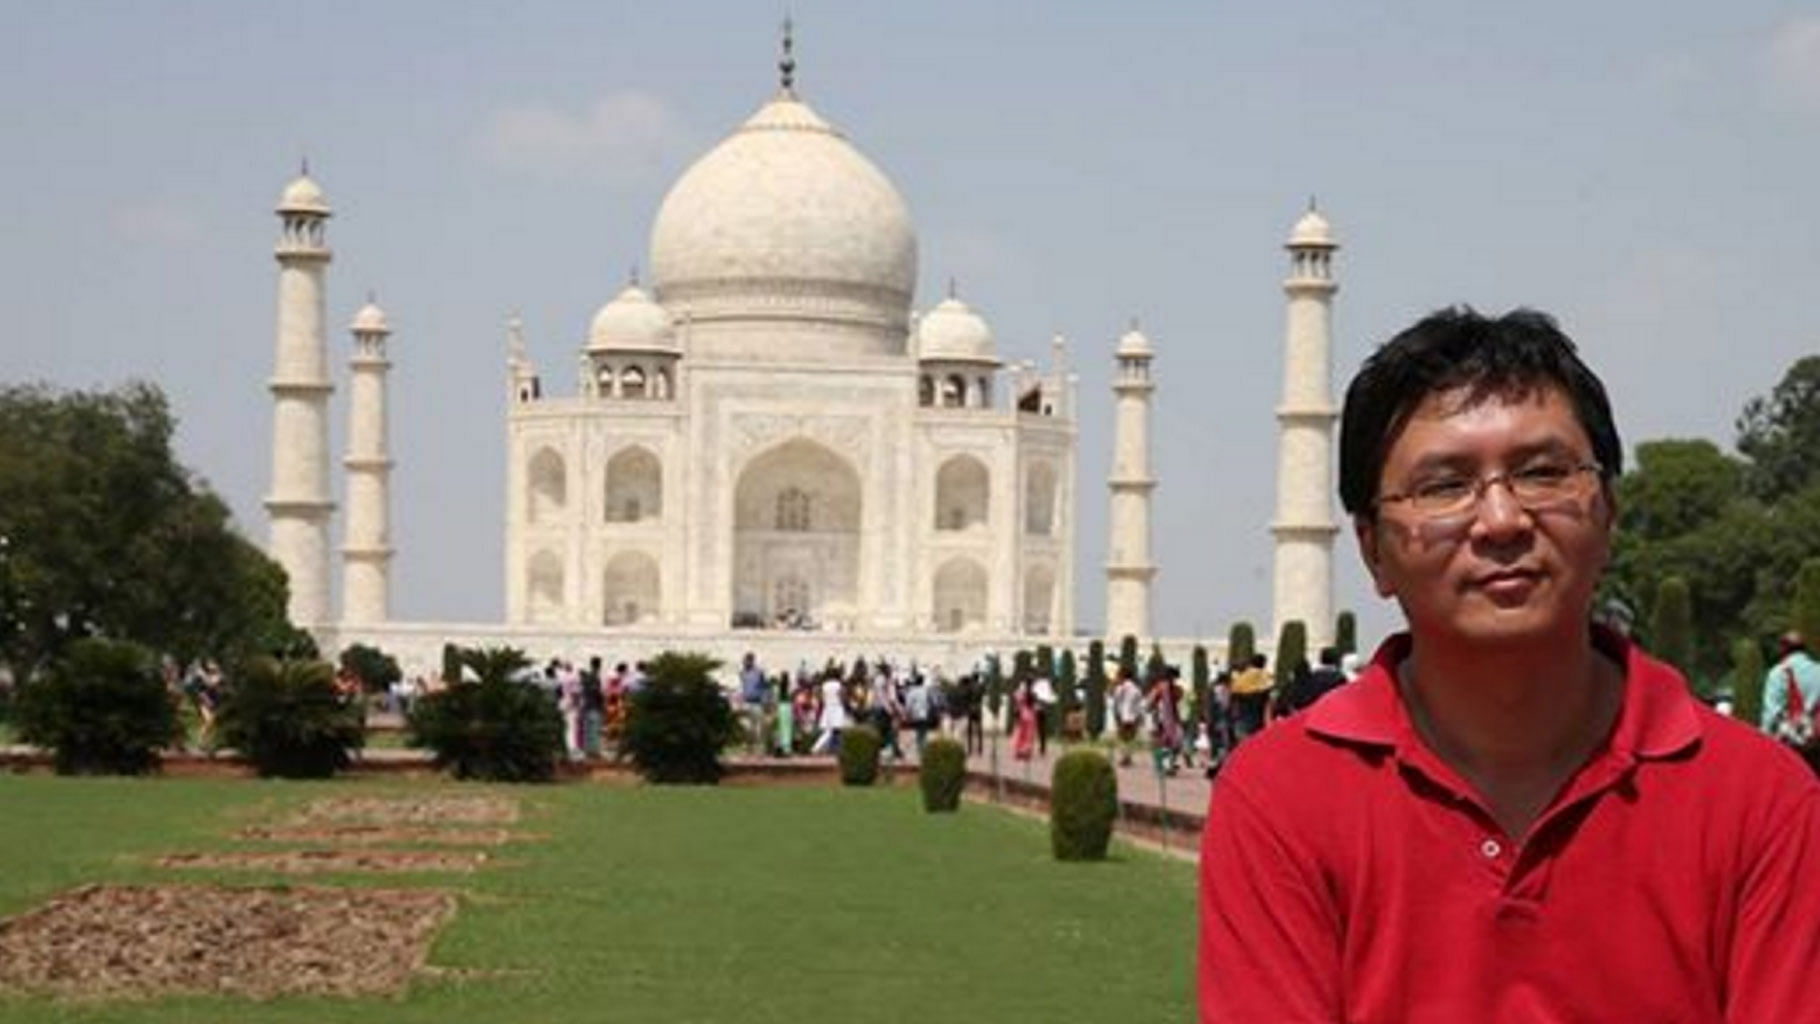 Wu Qiang at the Taj Mahal. (Photo Courtesy: <a href="https://www.facebook.com/photo.php?fbid=1085304138162624&amp;set=a.154551347904579.35497.100000491445680&amp;type=3&amp;theater">Facebook/Wu Qiang)</a>